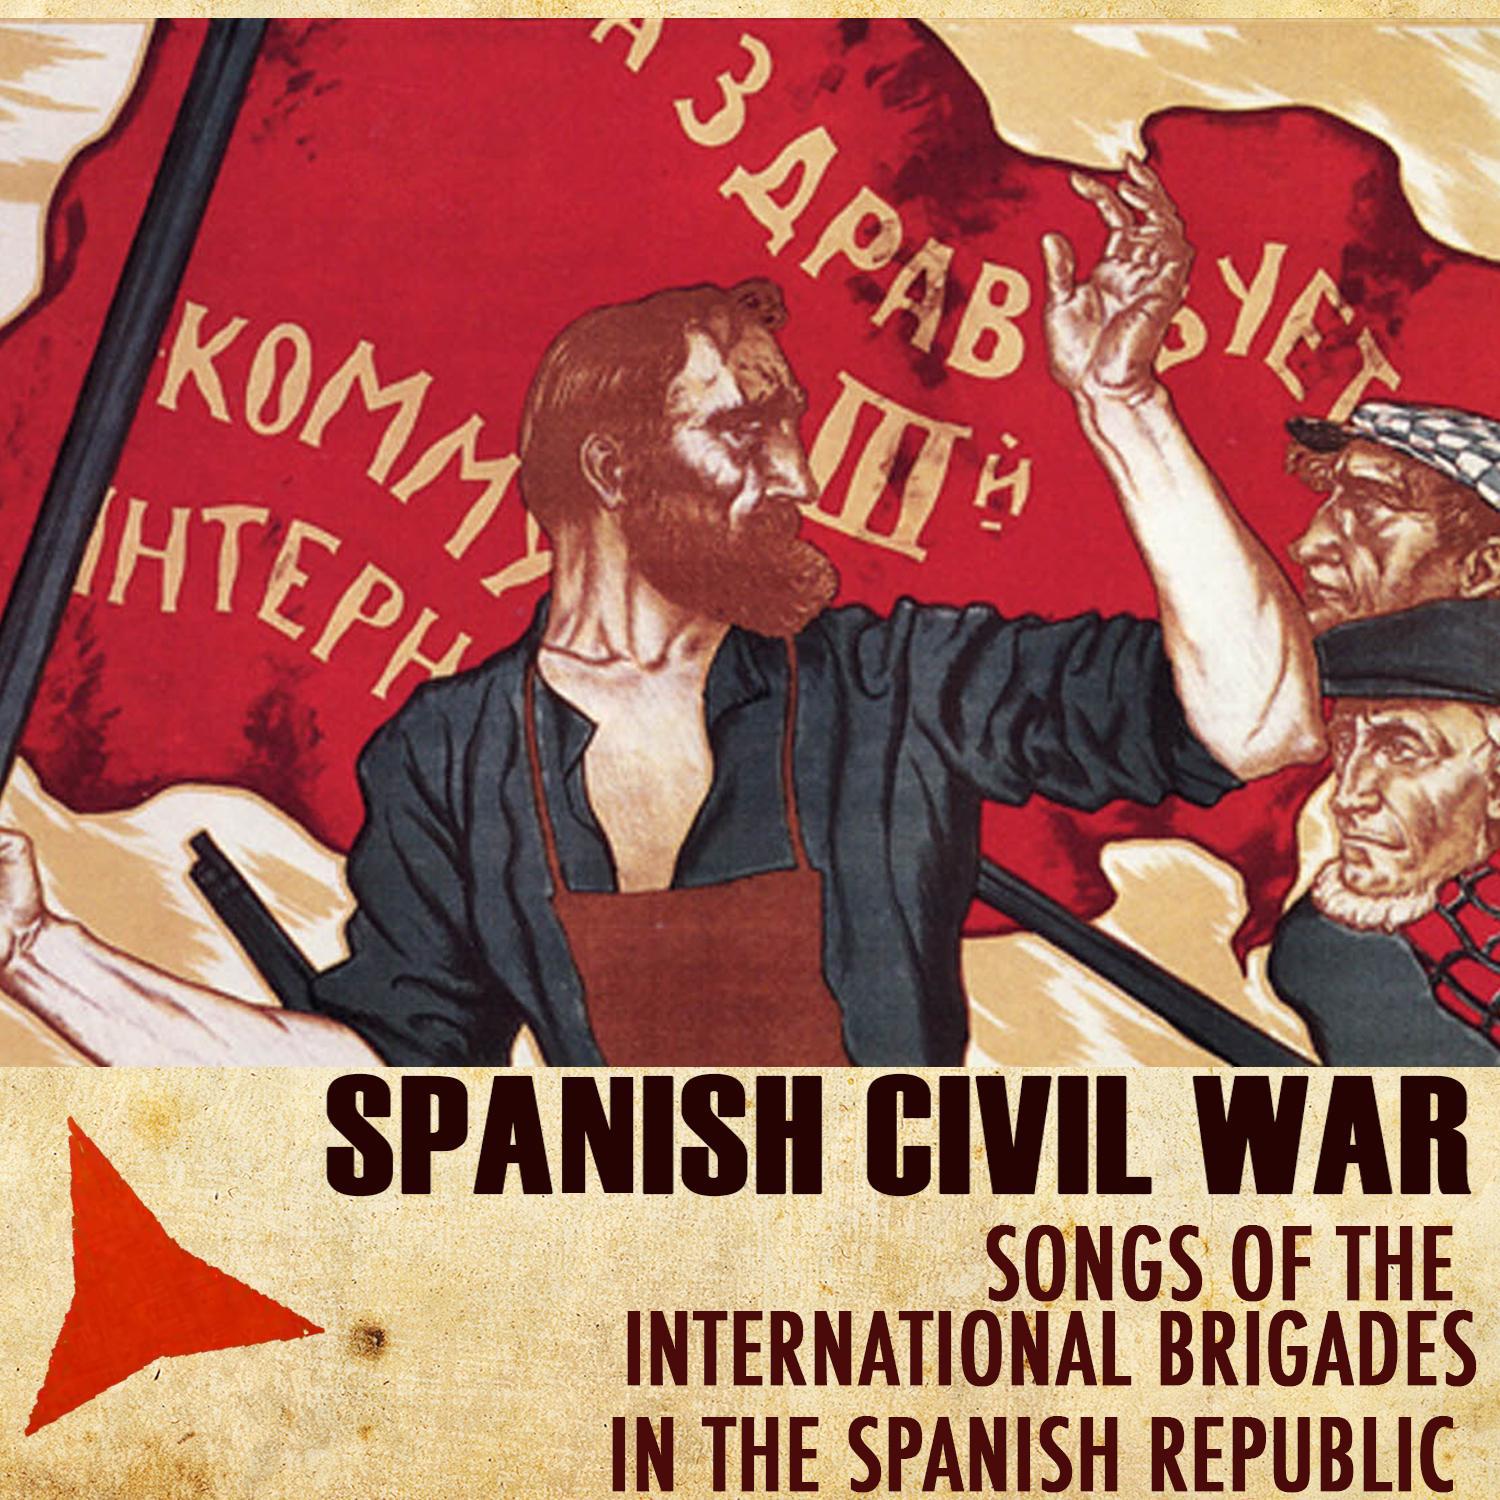 Spanish Civil War. Songs of the International Brigades in the Spanish Republic